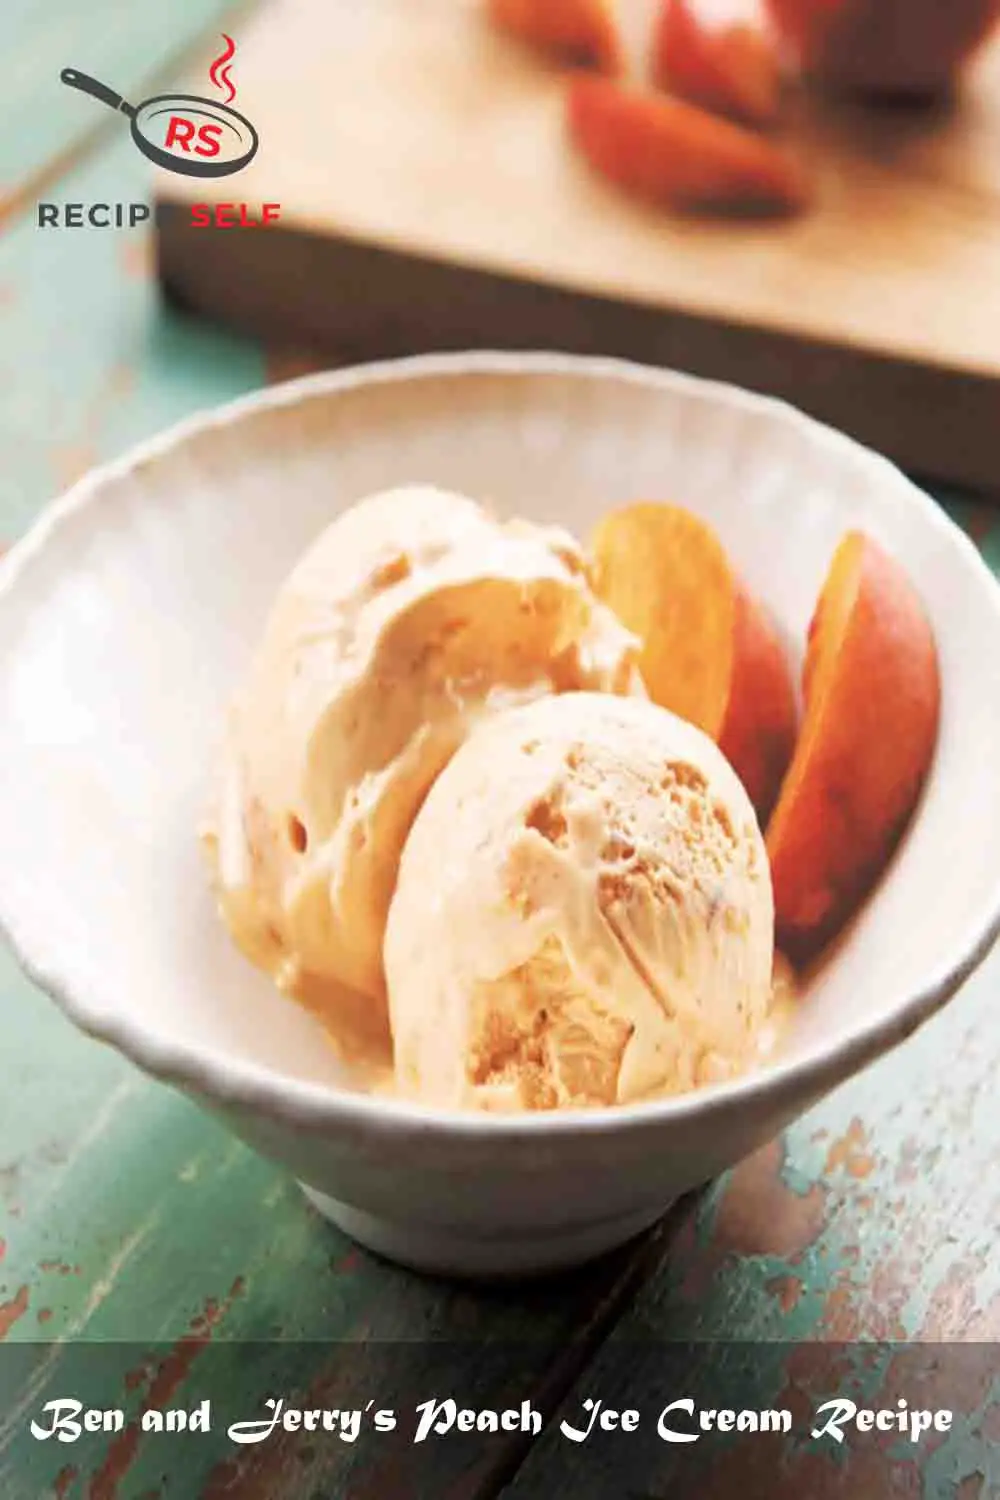 Ben and Jerry’s Peach Ice Cream Recipe